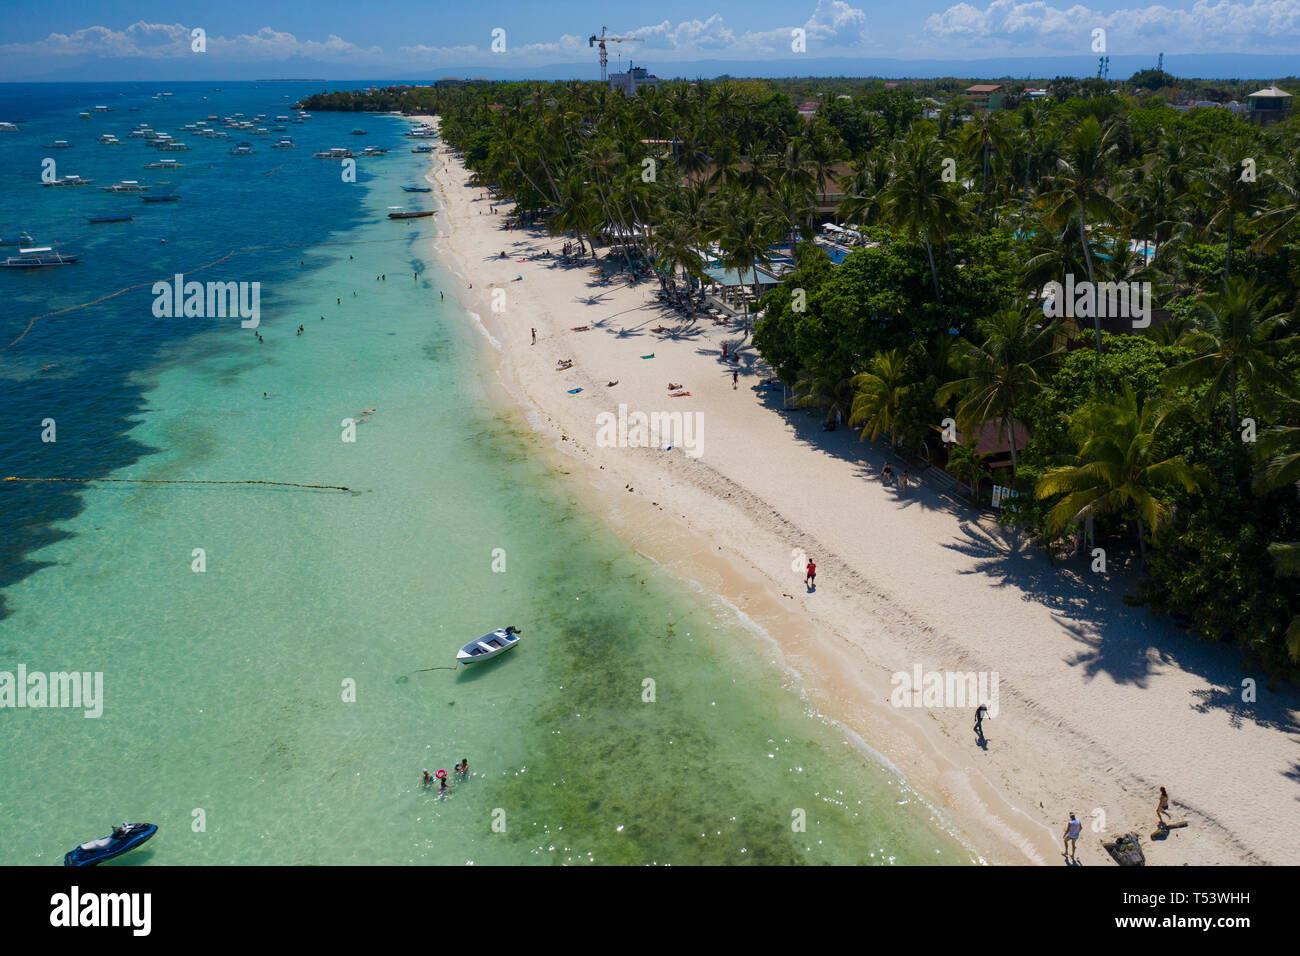 Aerial View Of Alona Beachpanglaoboholphilippines Stock Photo Alamy